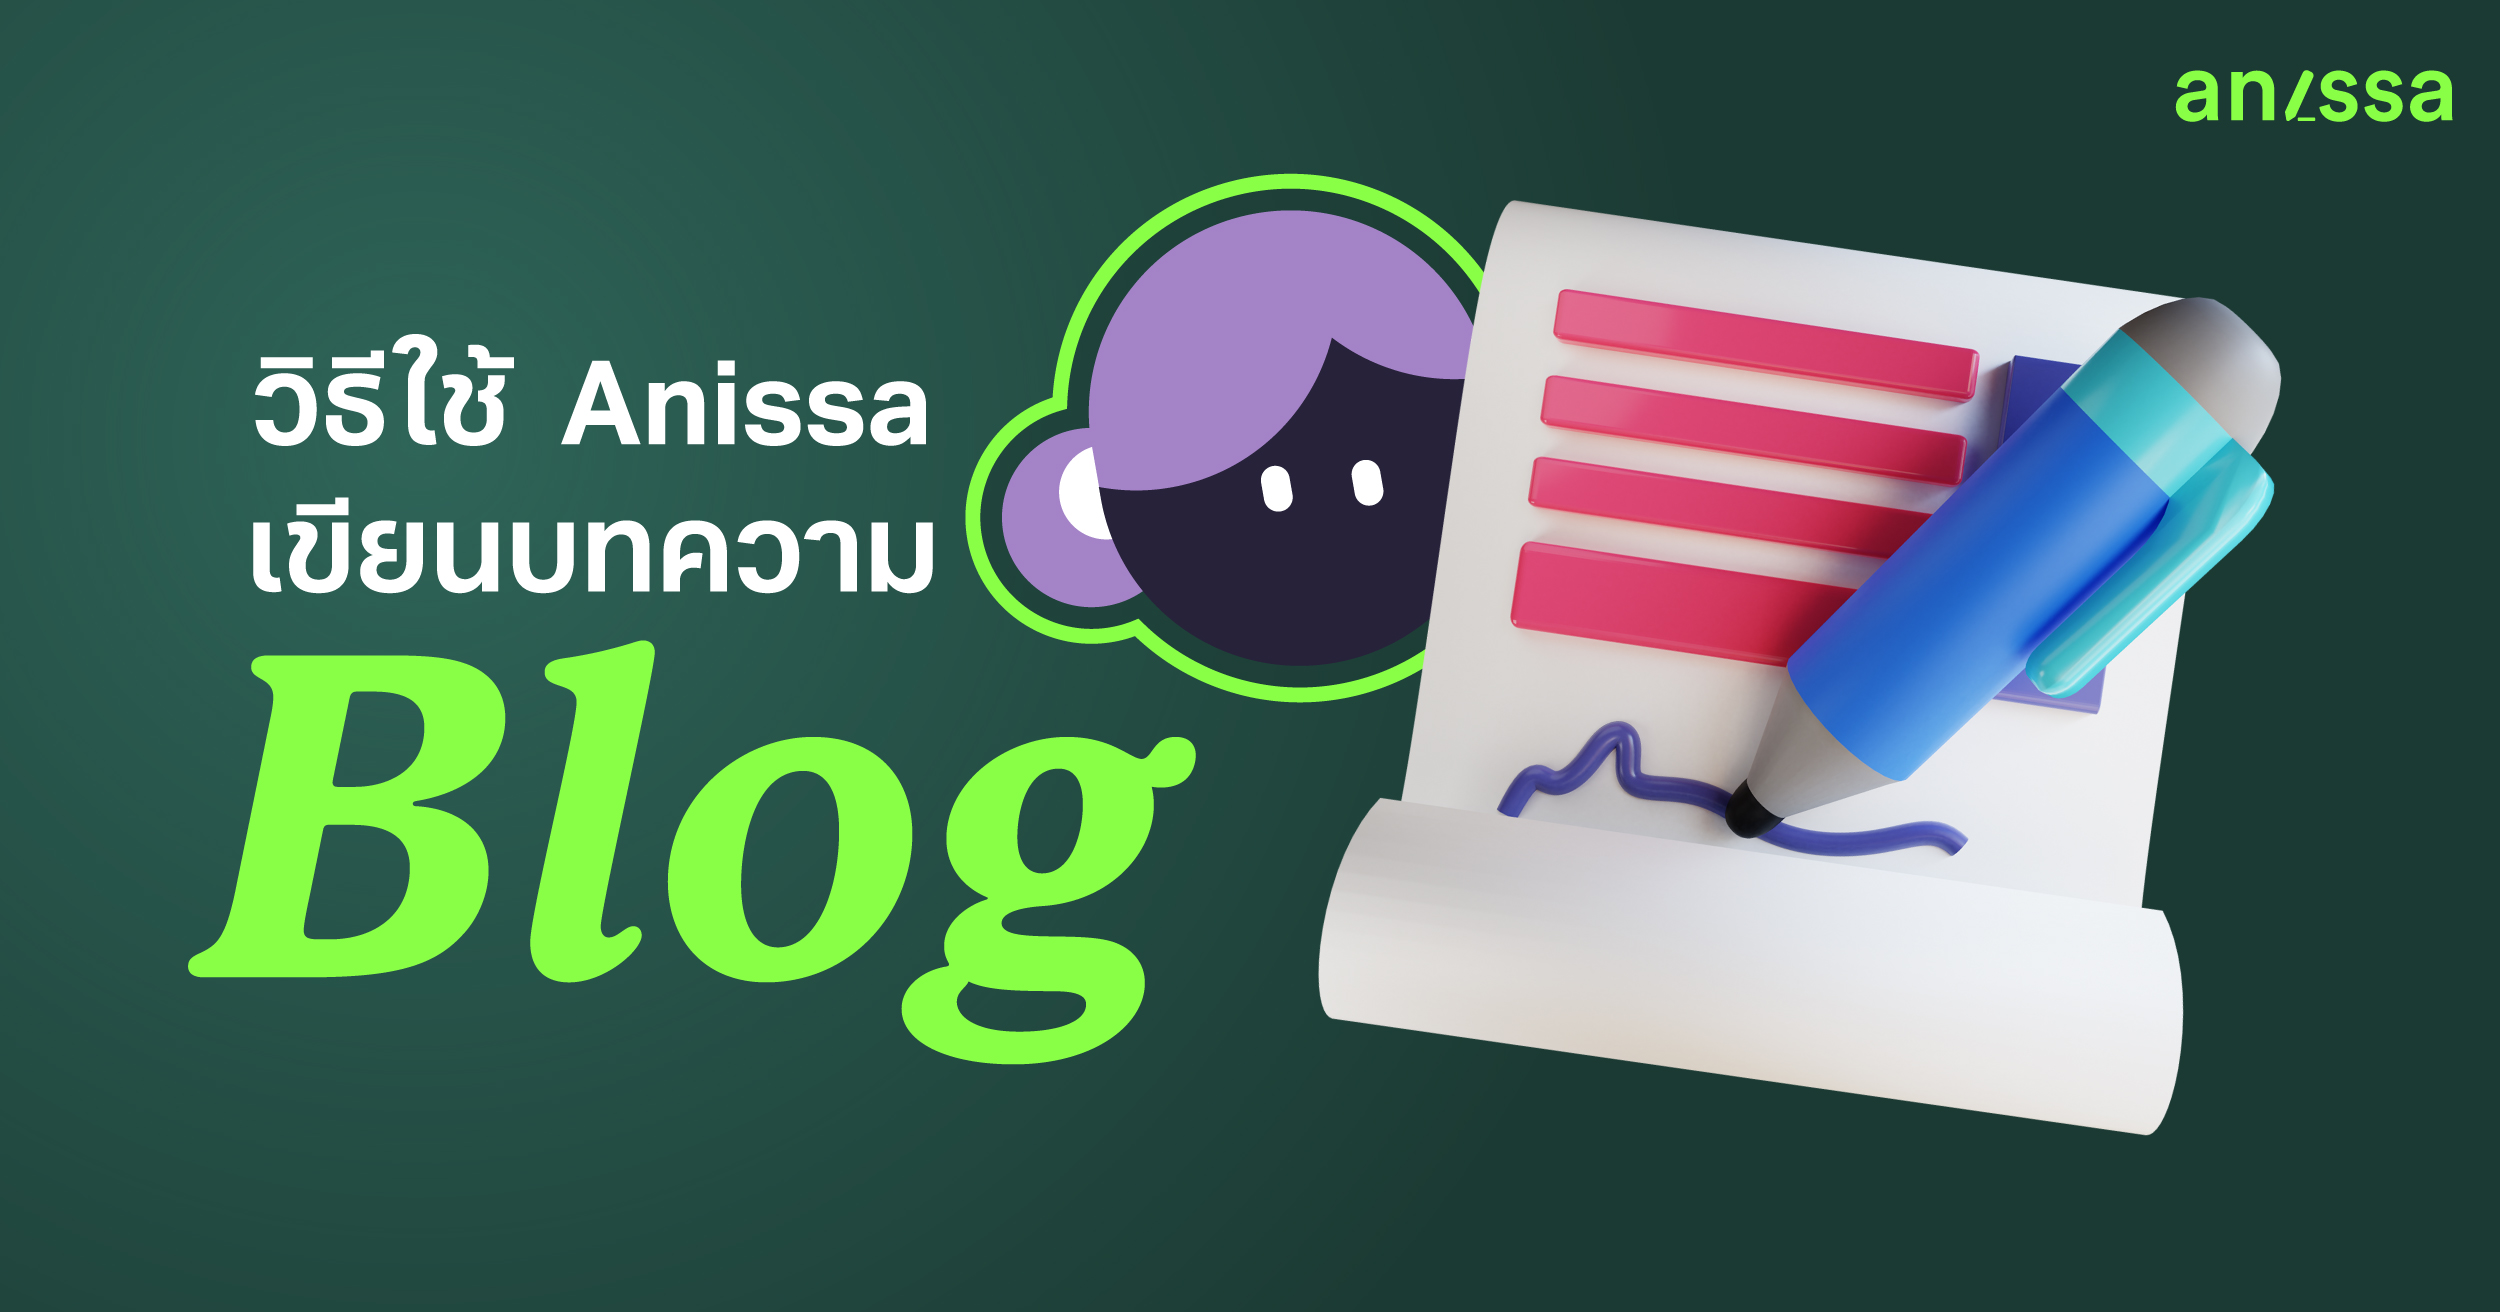 Tutorial การใช้งาน Anissa สำหรับการเขียนบทความ/Blog